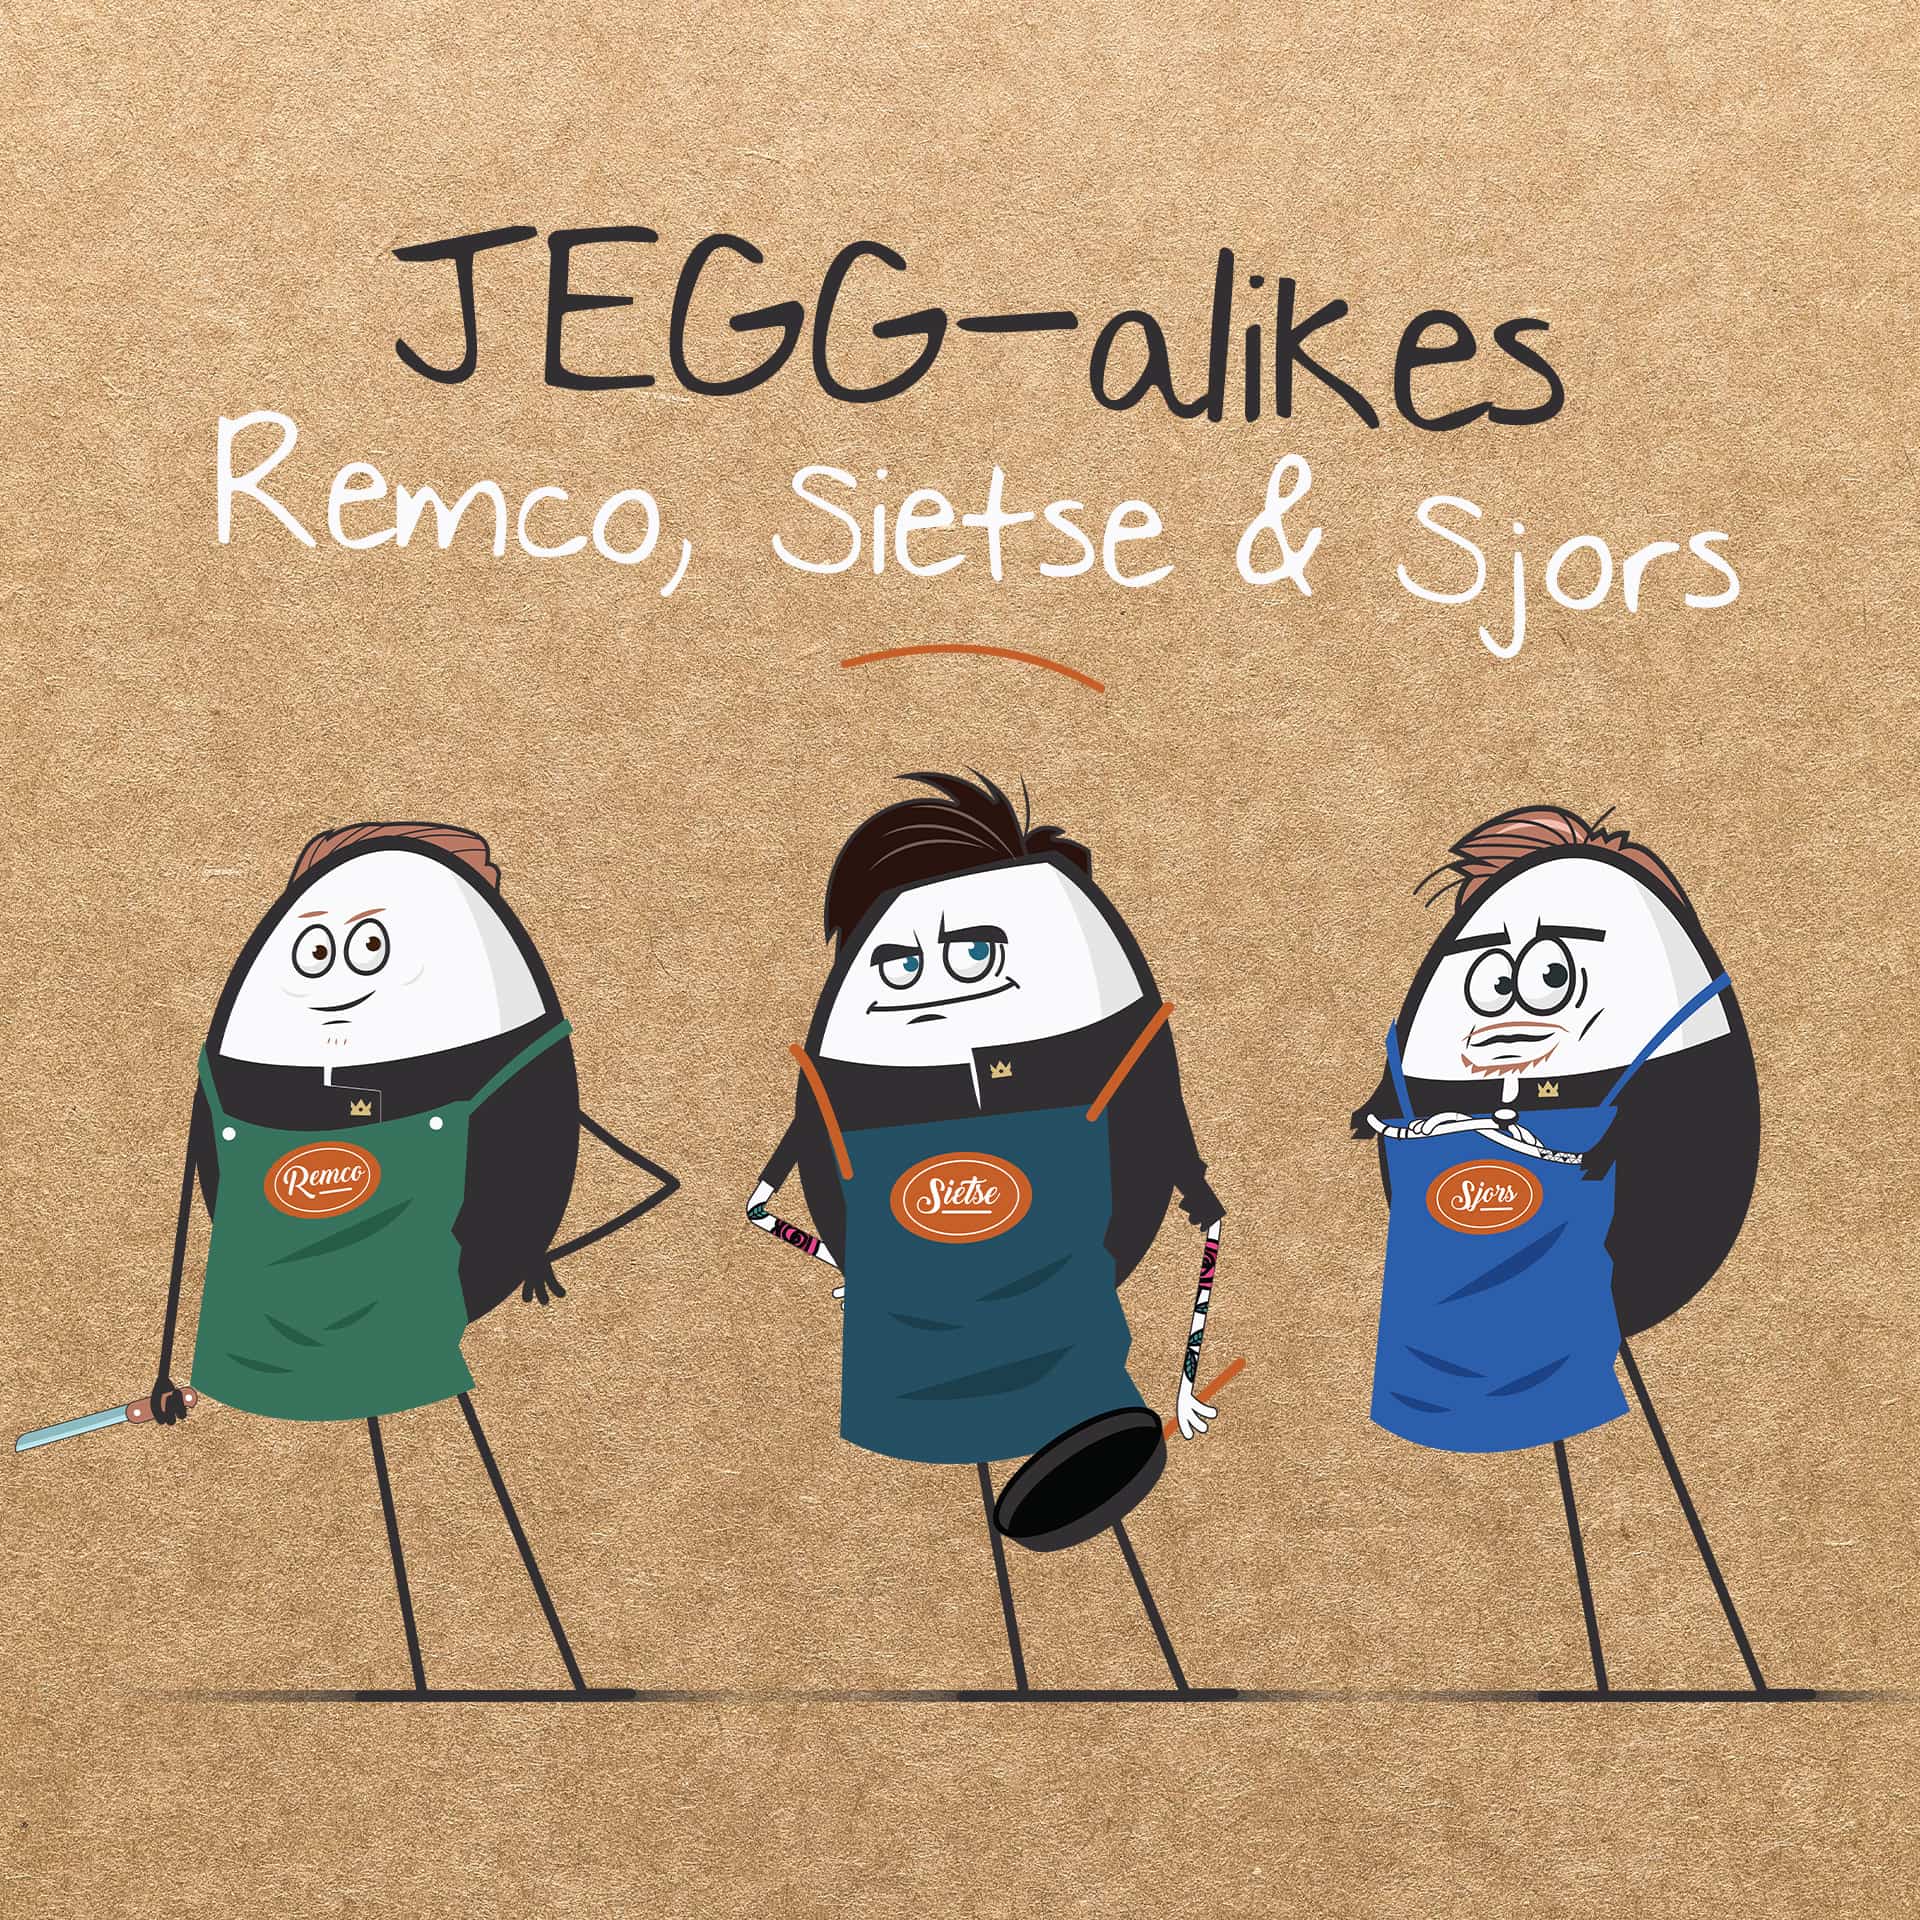 JEGG-alikes